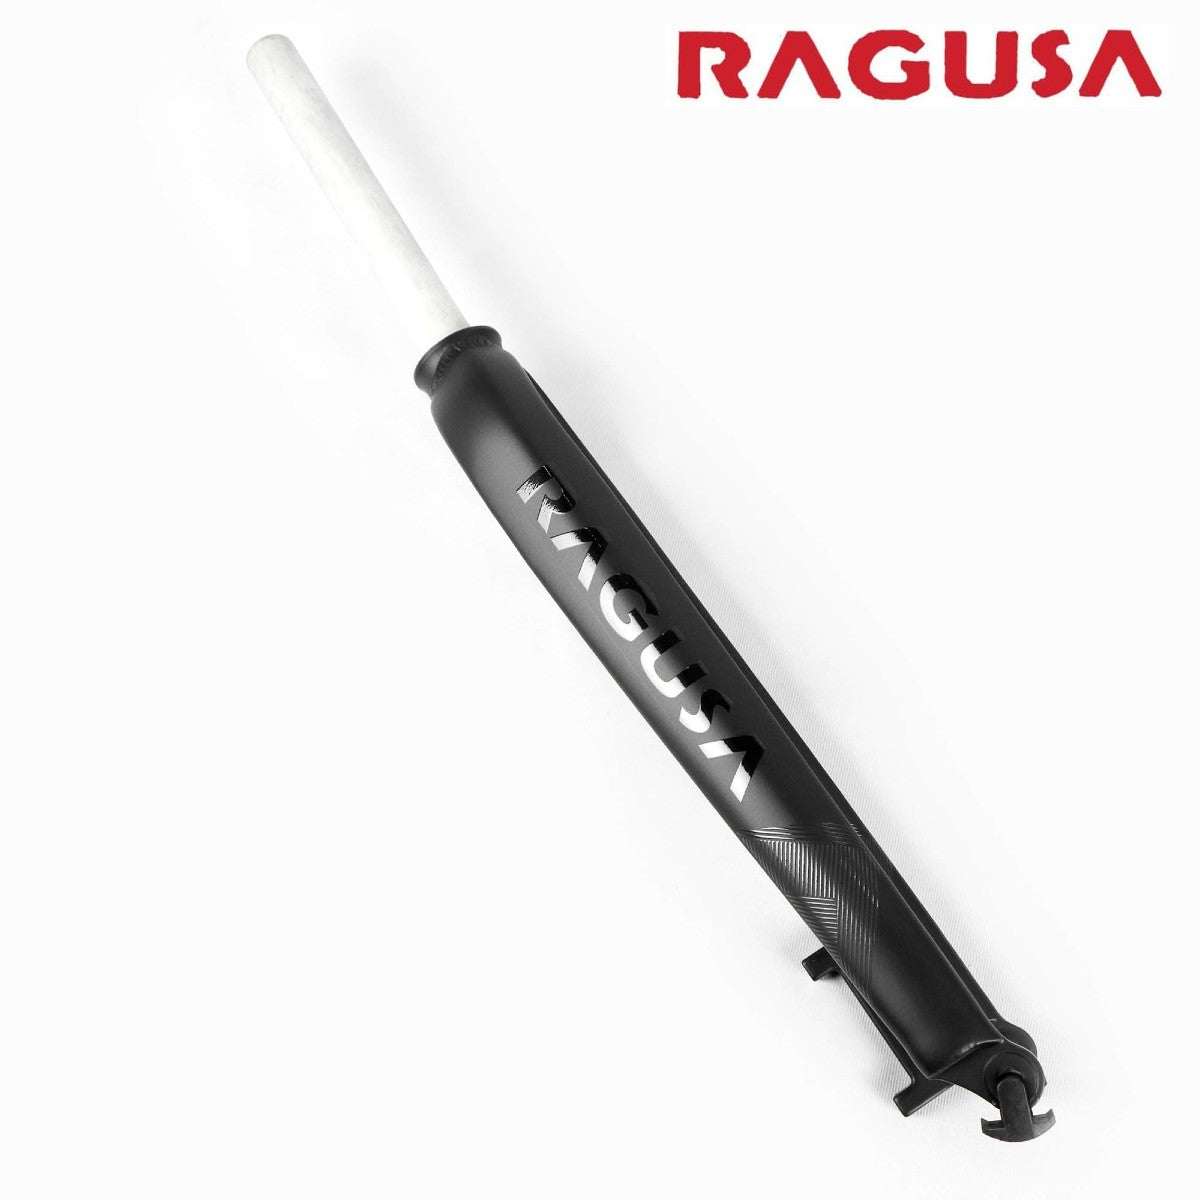 Ragusa R300 Alloy MTB Rigid Fork Quick Release 29er